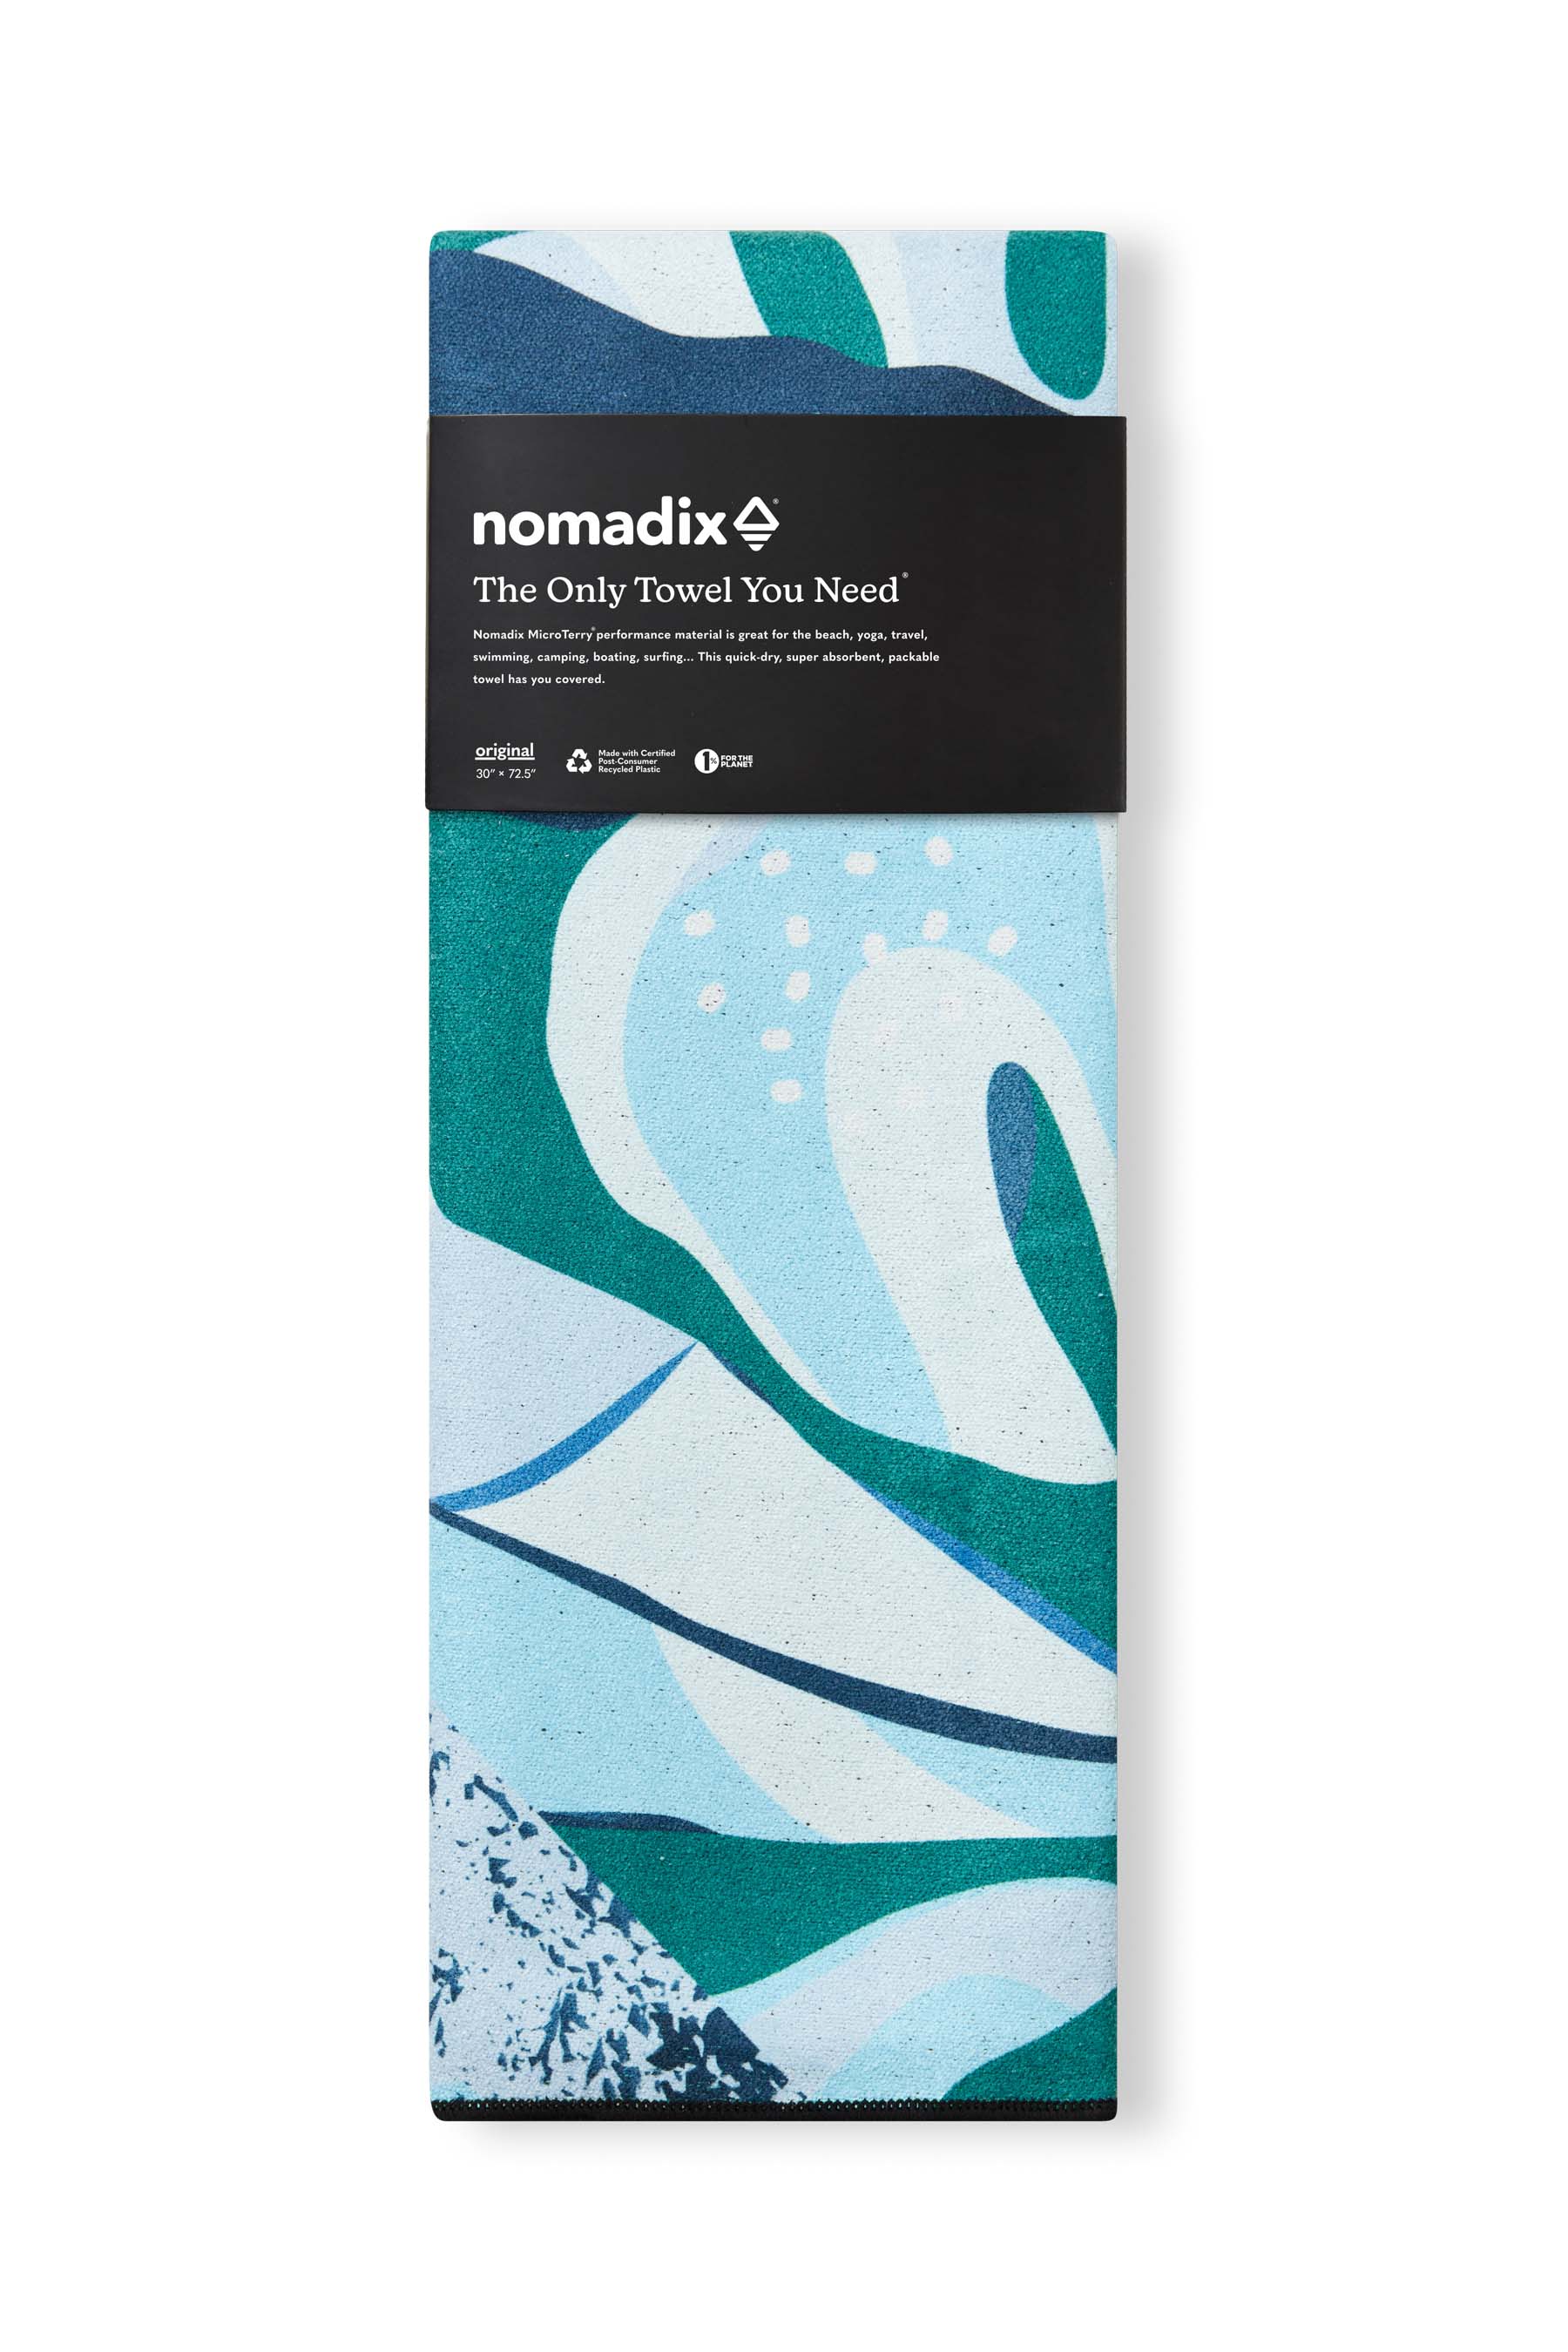 The Original Nomadix Towel - Monstera Blue